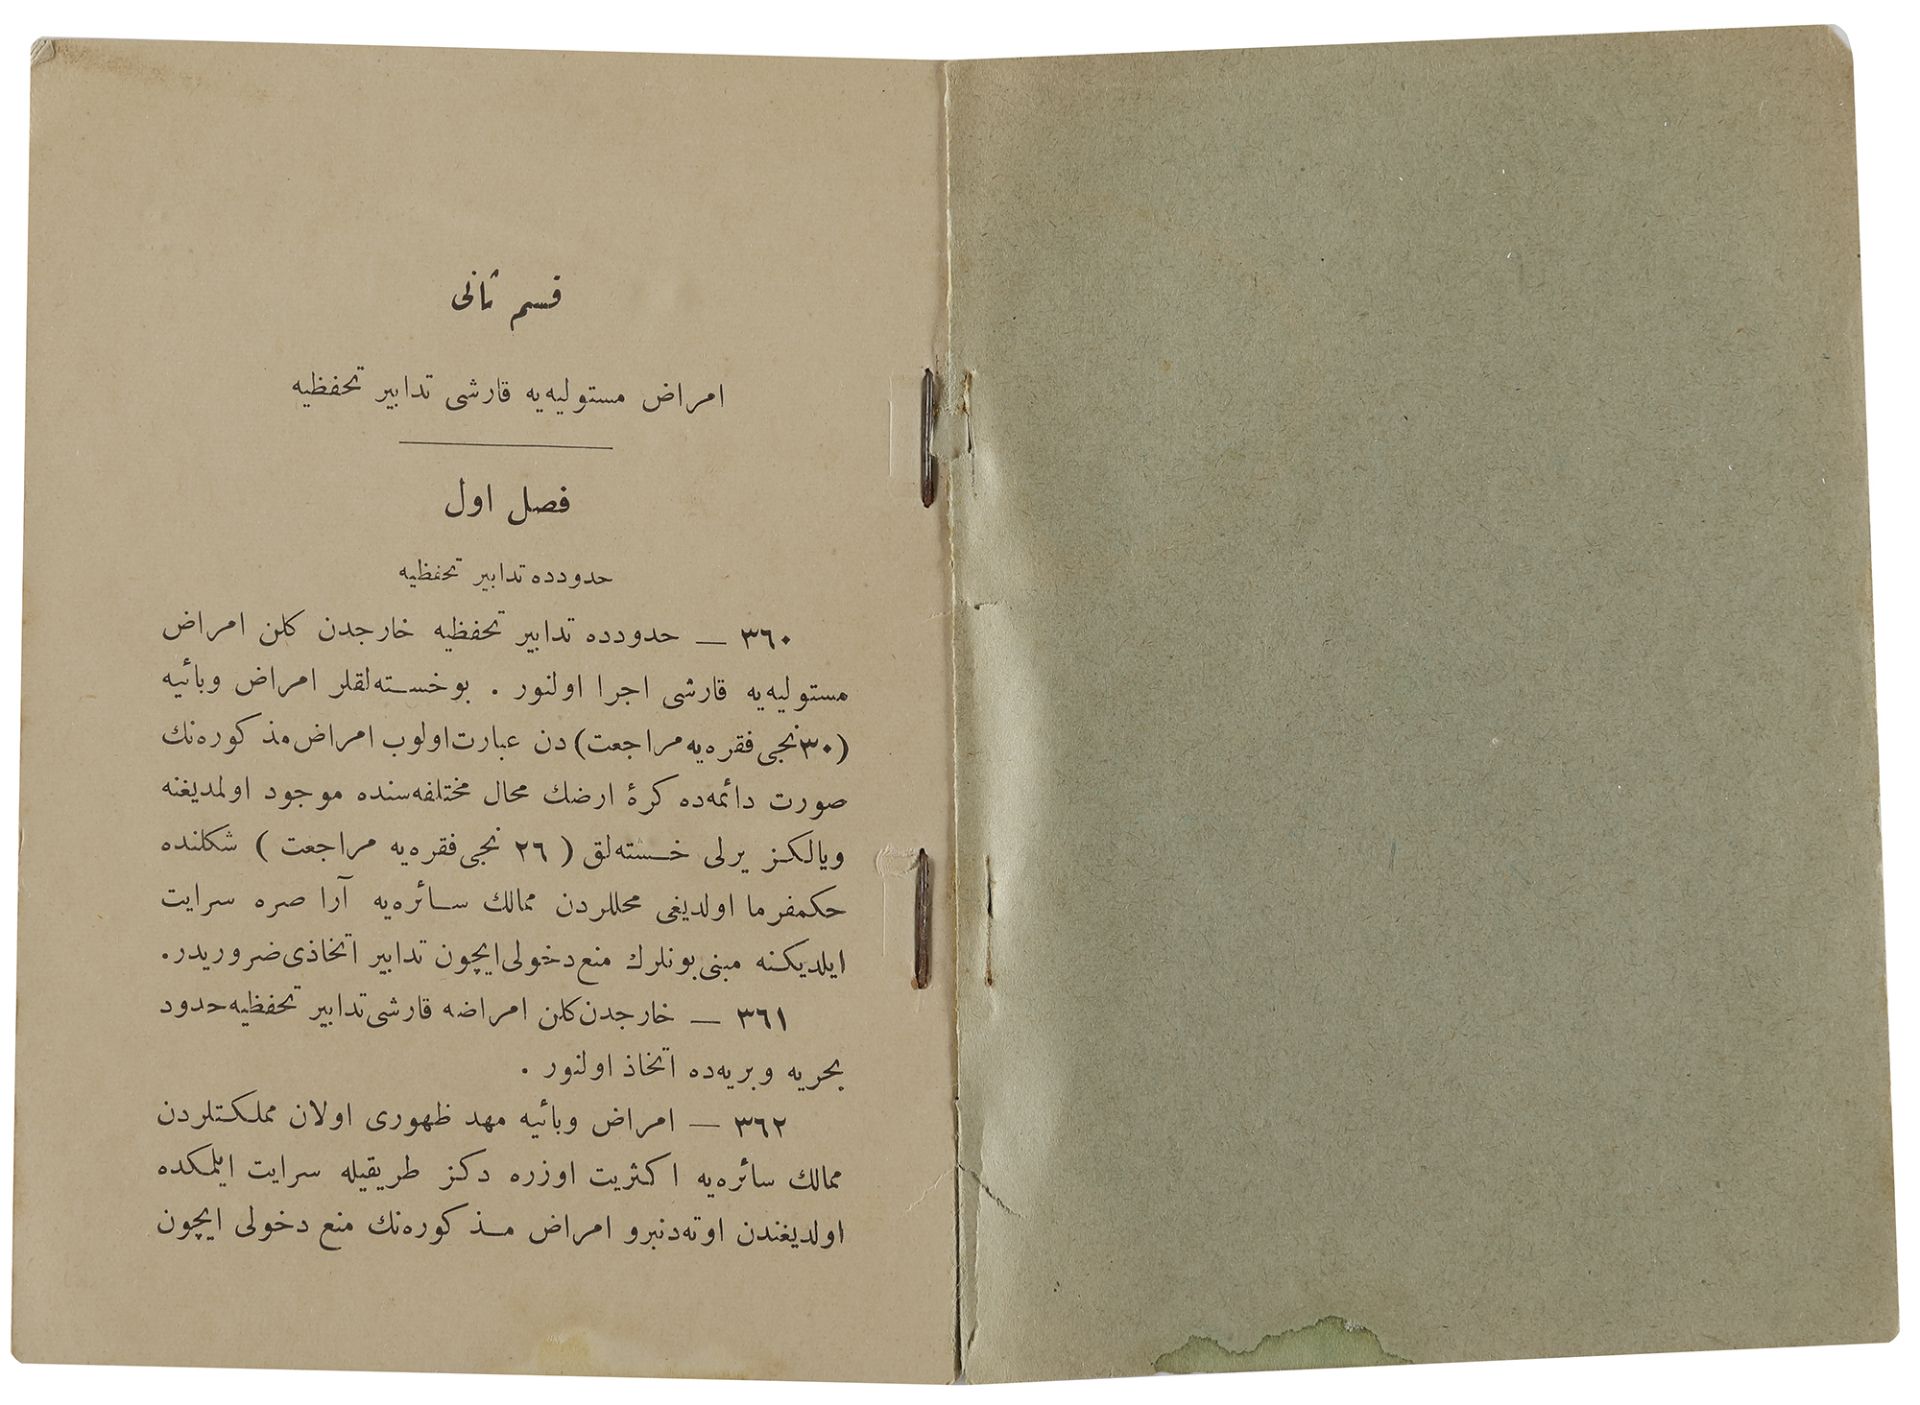 TWO BOOKS OF HIJAZ SANITARY ADMINISTRATION, ANNUAL REPORT FOR HAJJ, EDITED BY DR. HAJJ QASIM EZZ EL- - Image 3 of 12